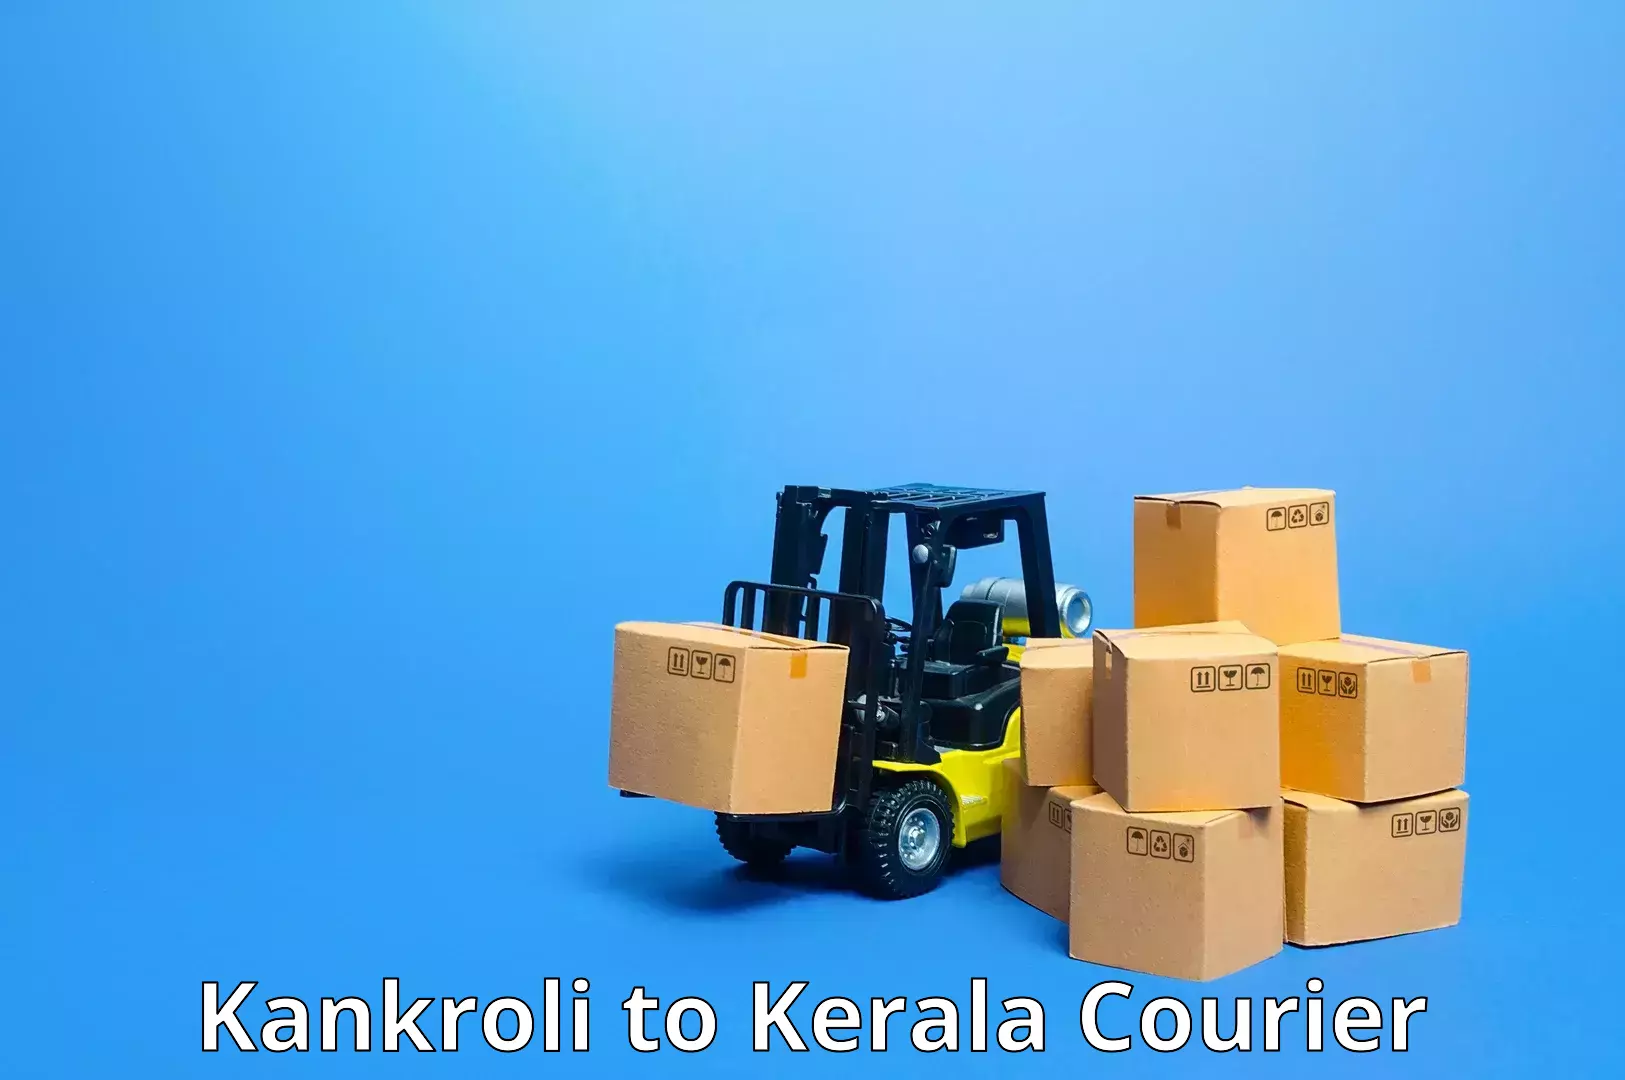 Express postal services Kankroli to Kerala